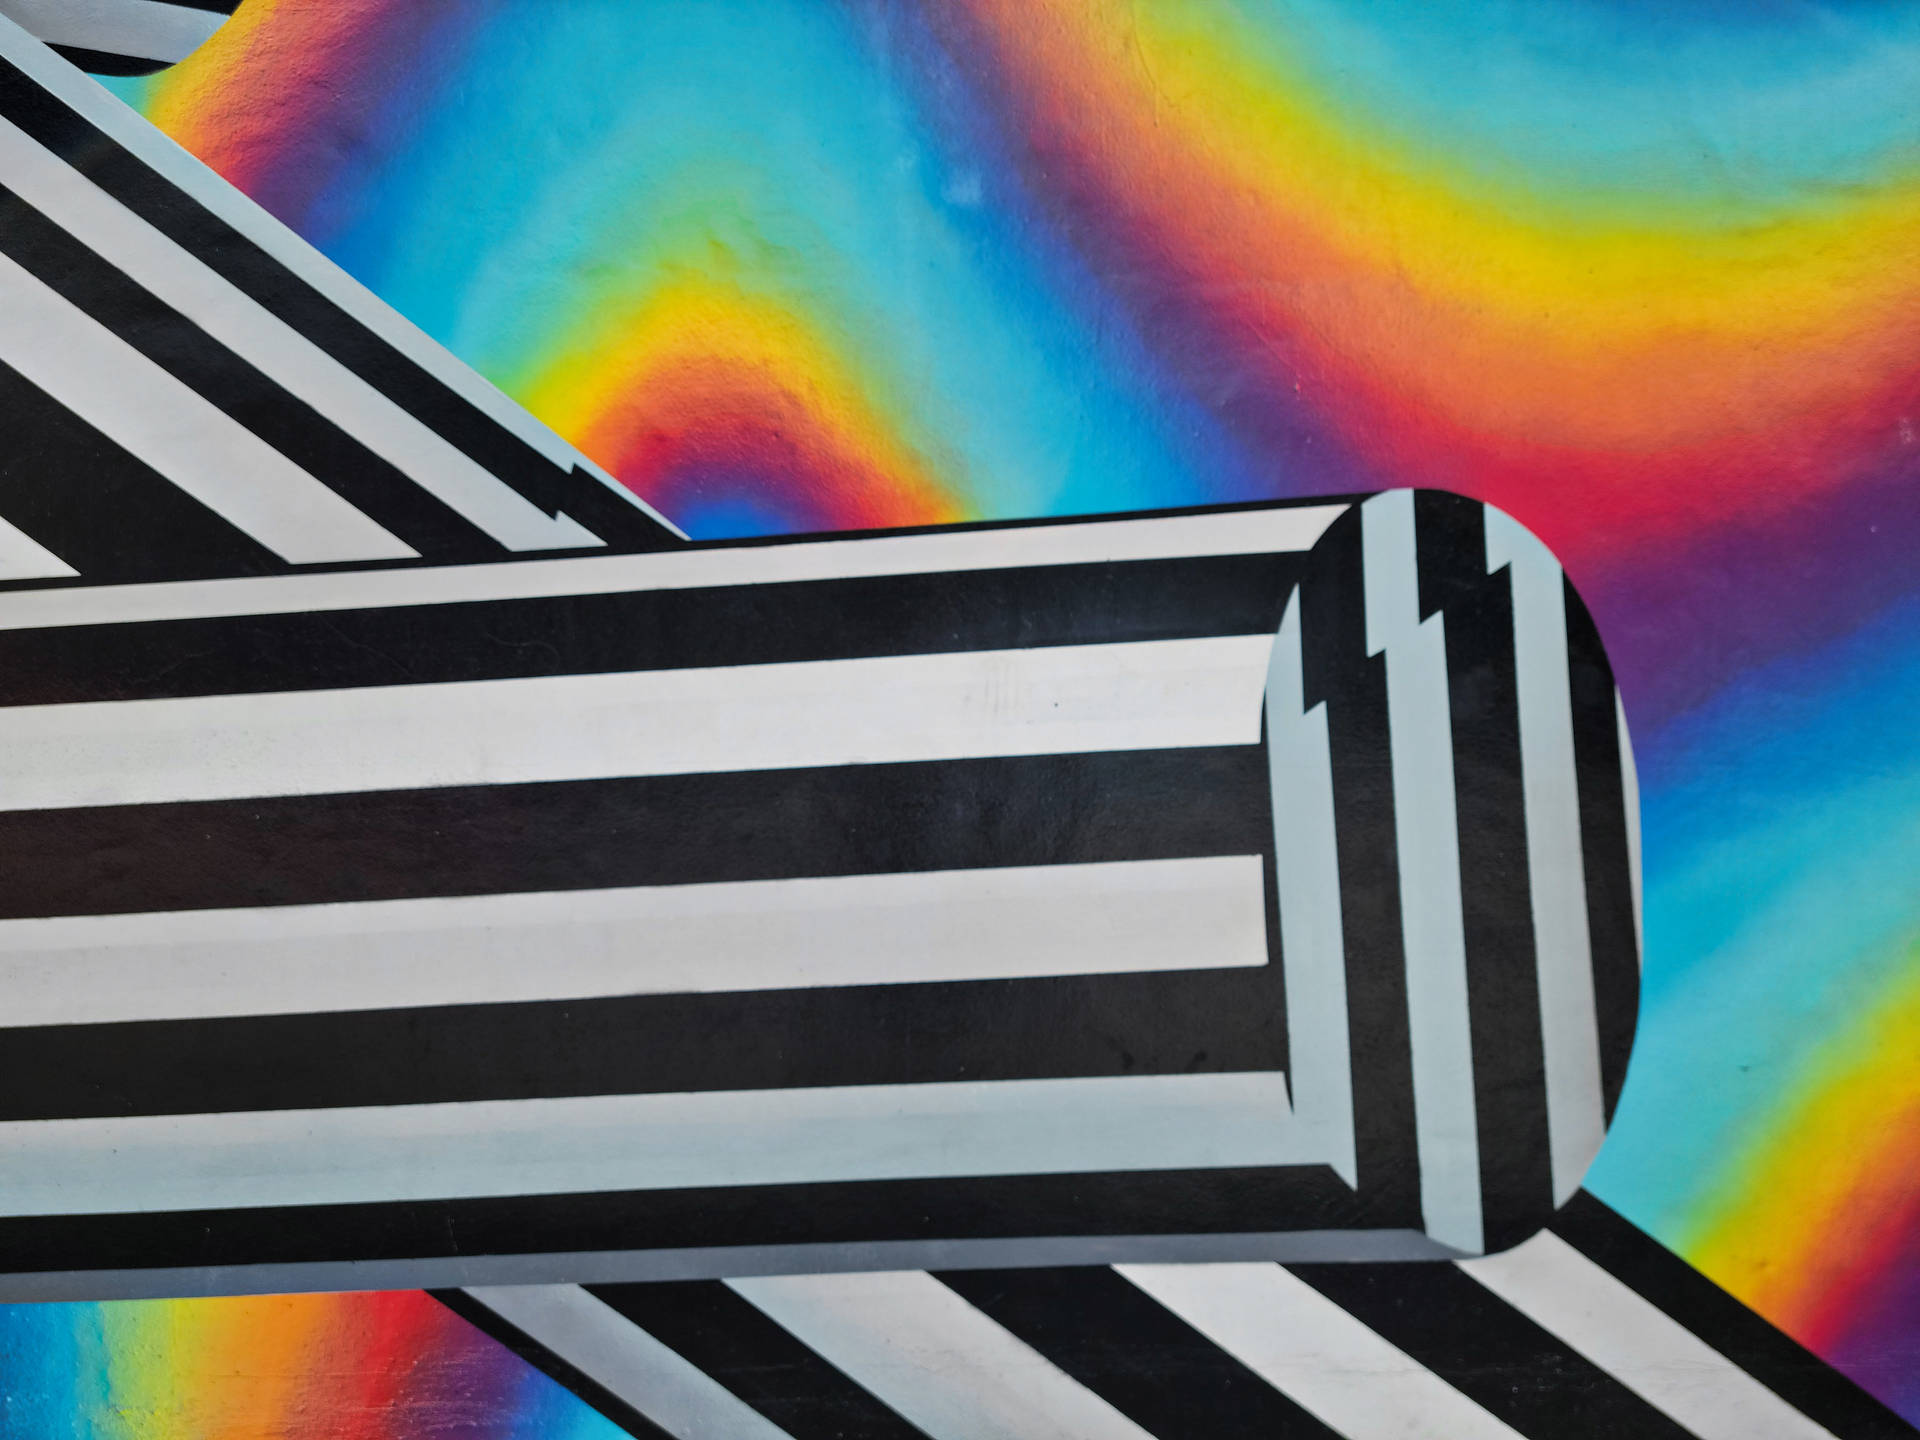 Caption: Artistic Rainbow Stripes Design